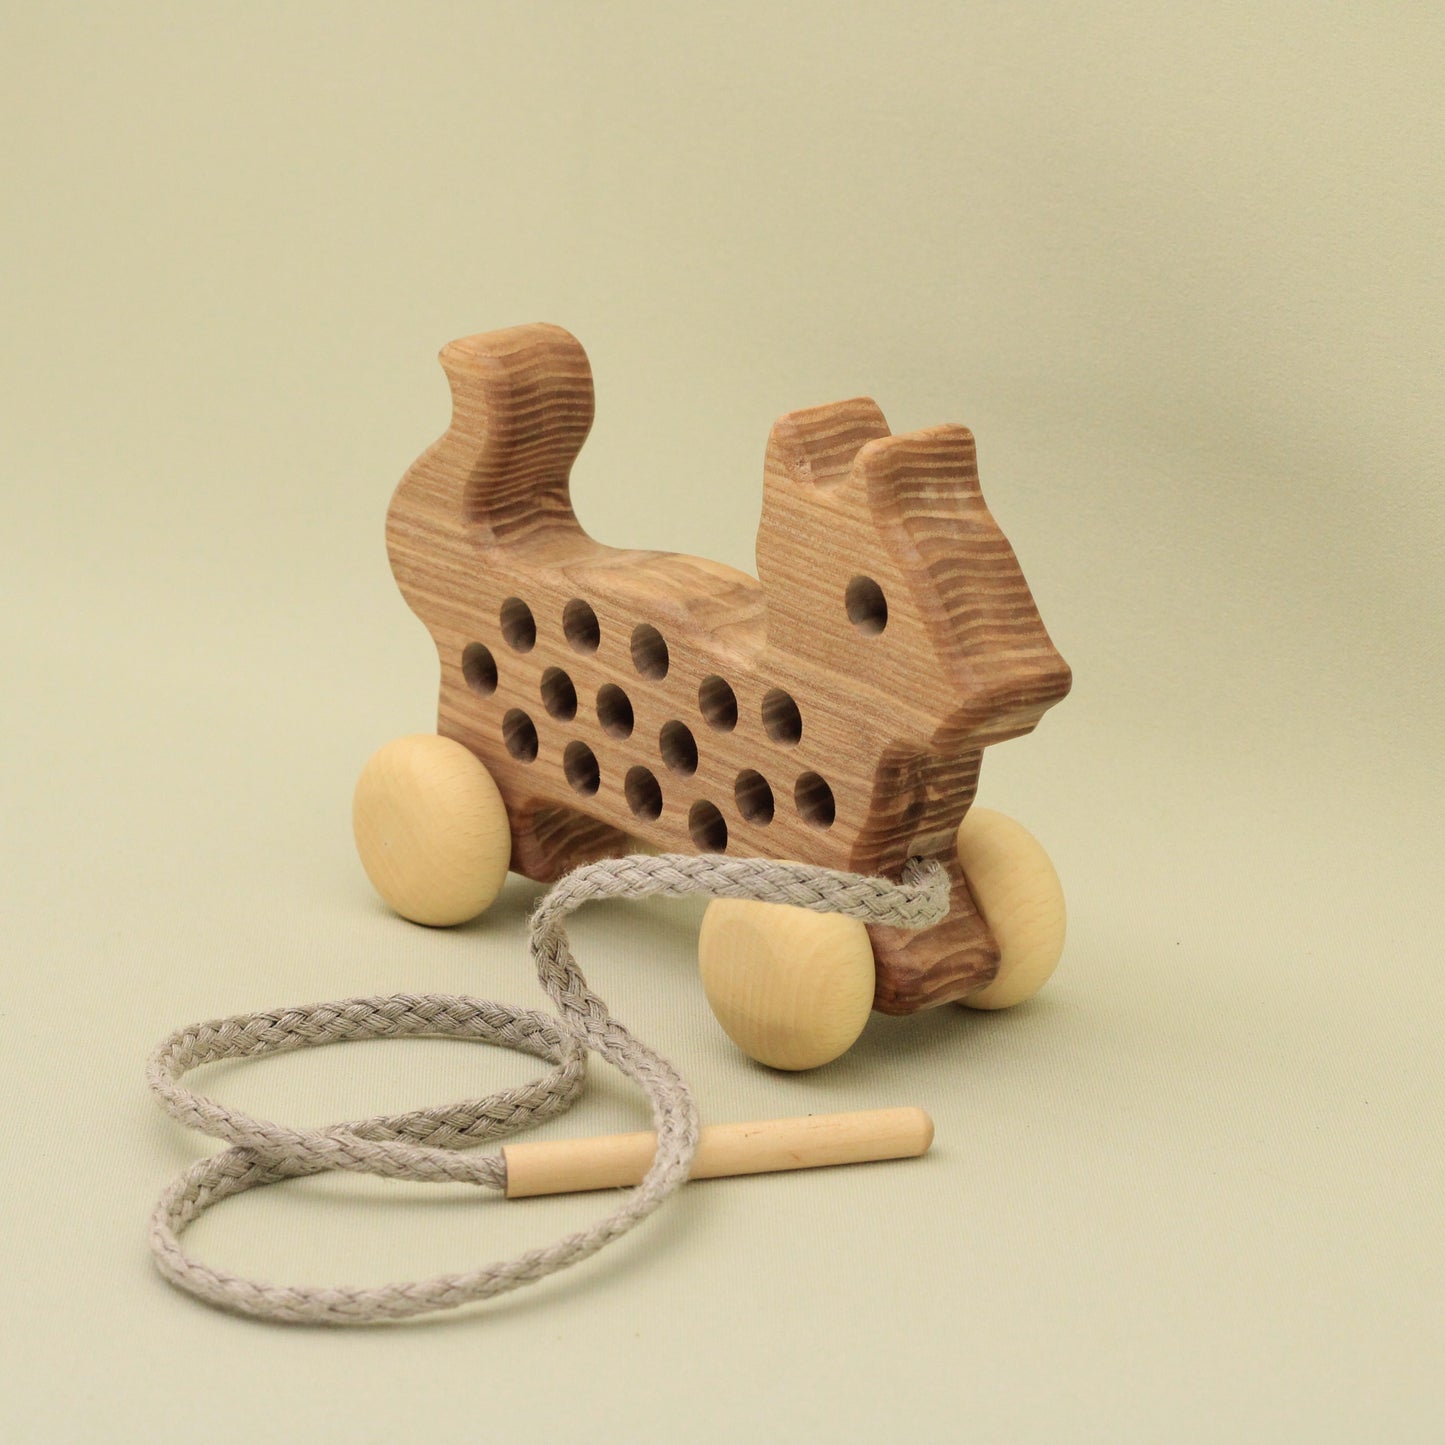 Lotes Toys Natural Wooden Threading Lacing Cat TT42